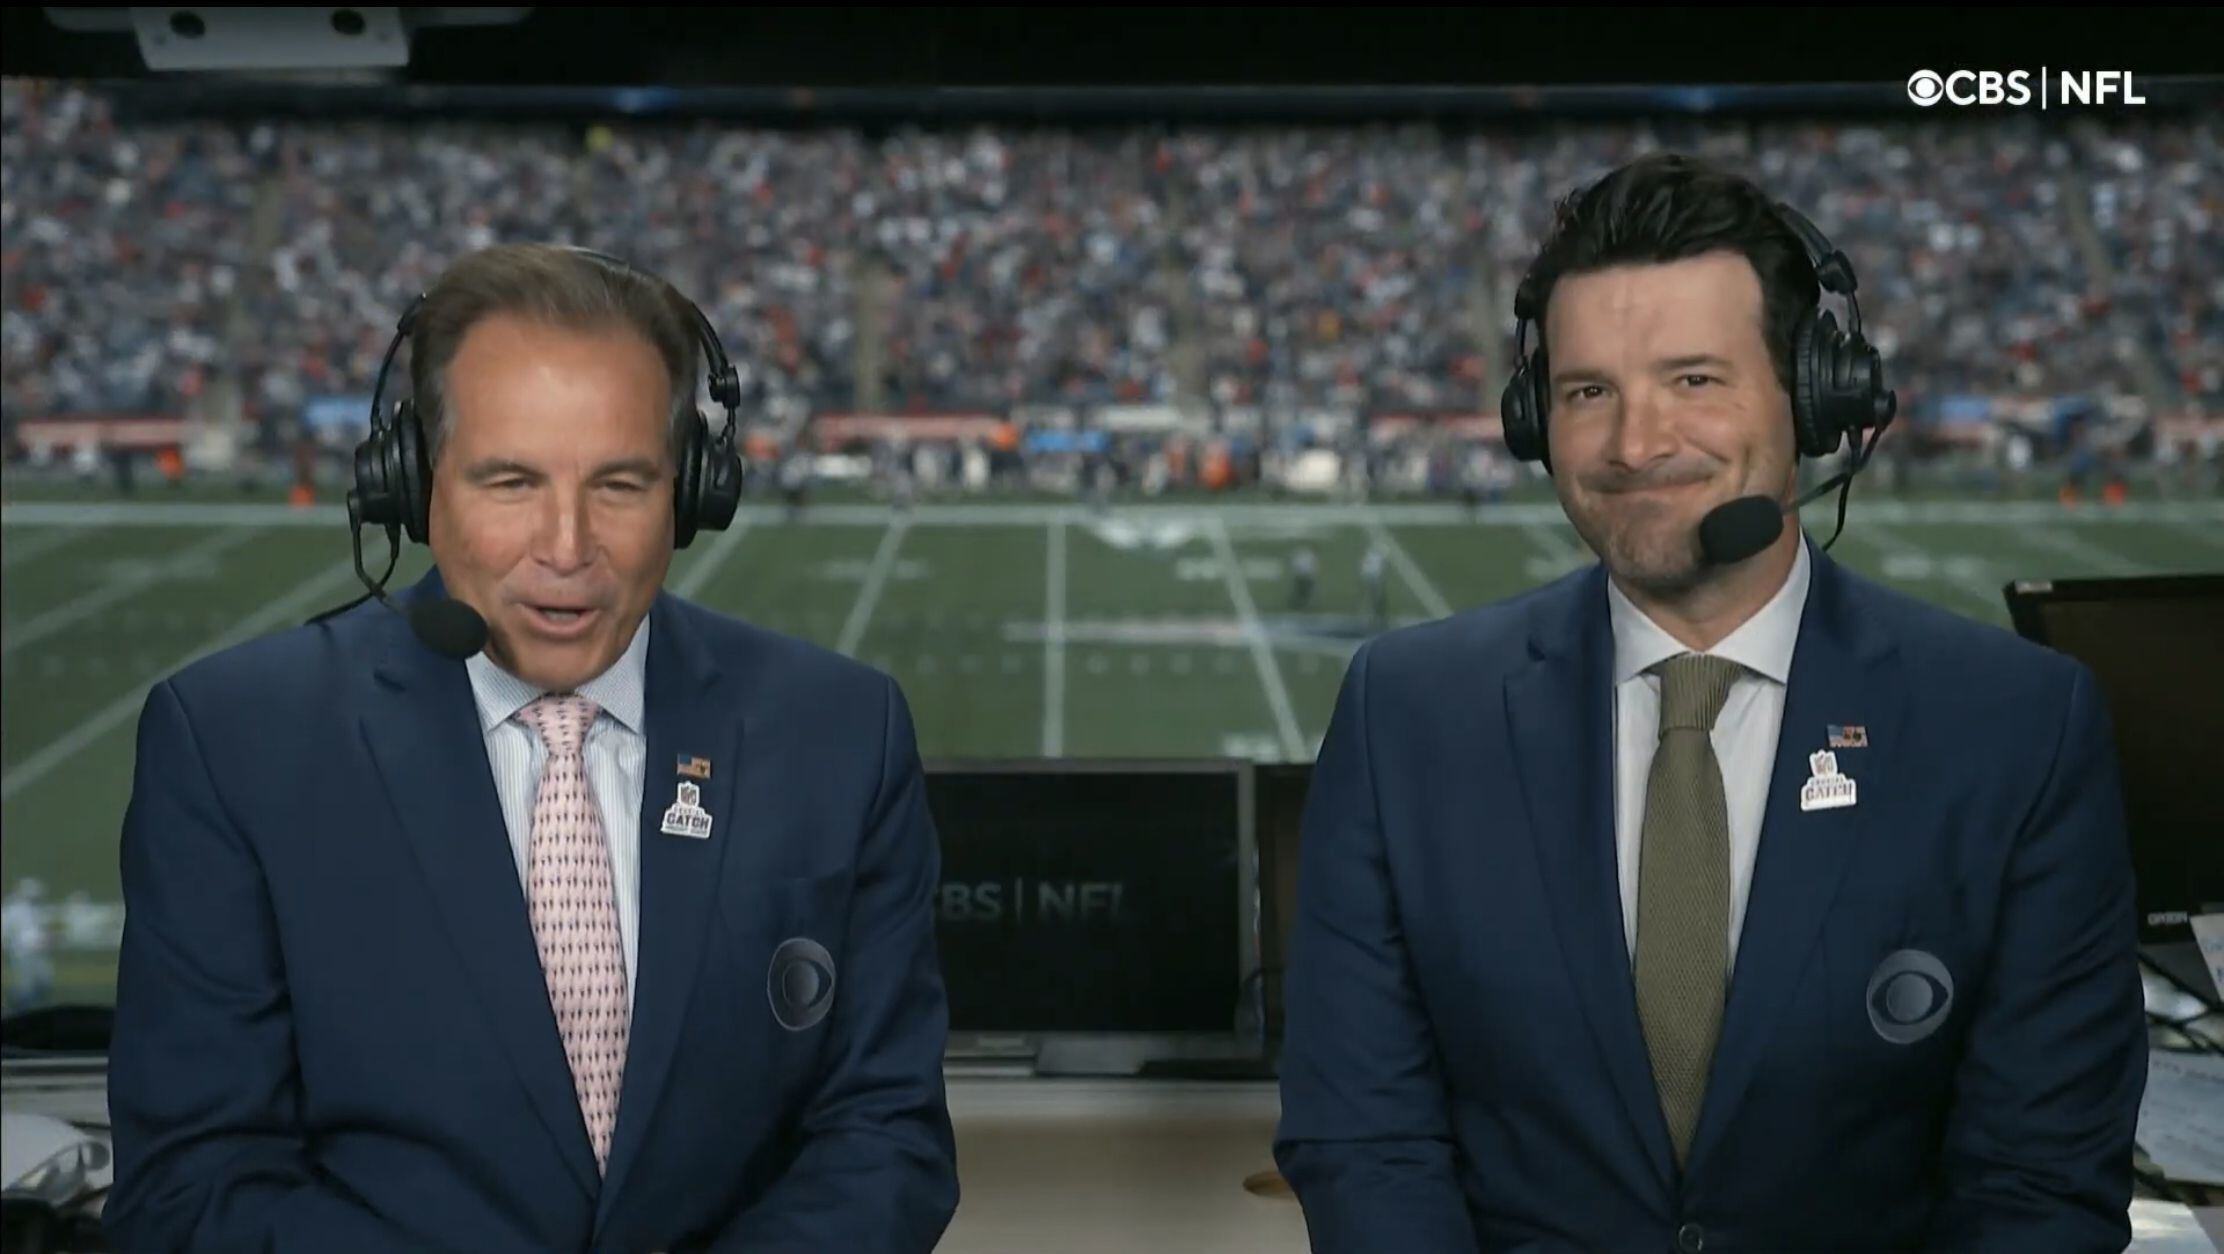 Monday Night Football With Peyton and Eli (9/13/21) - Live Stream - Watch  ESPN